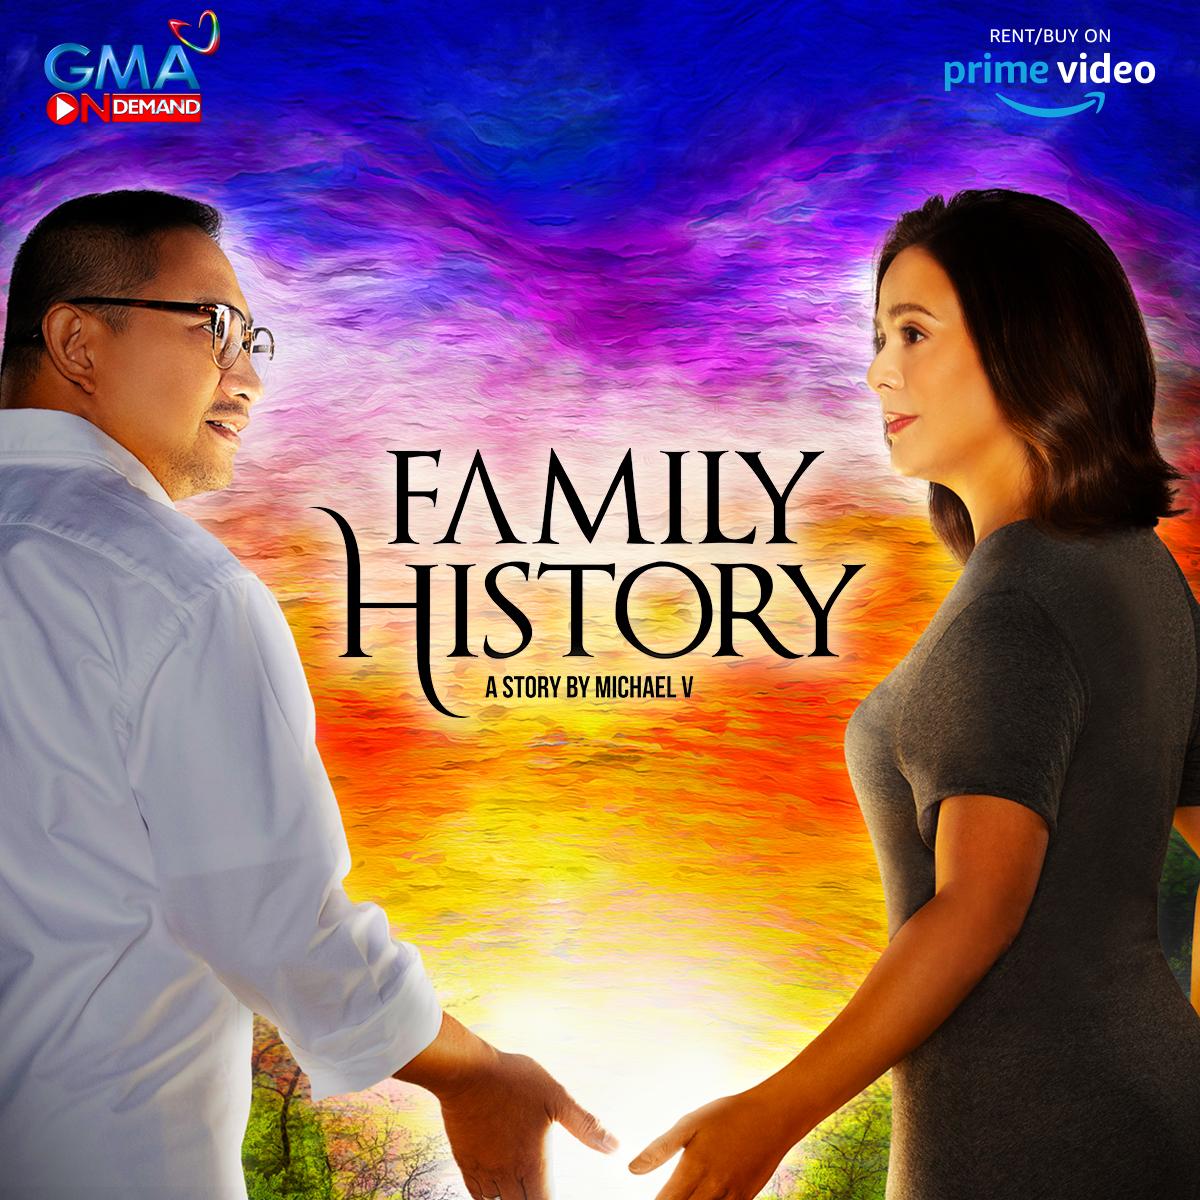 family history movie review tagalog